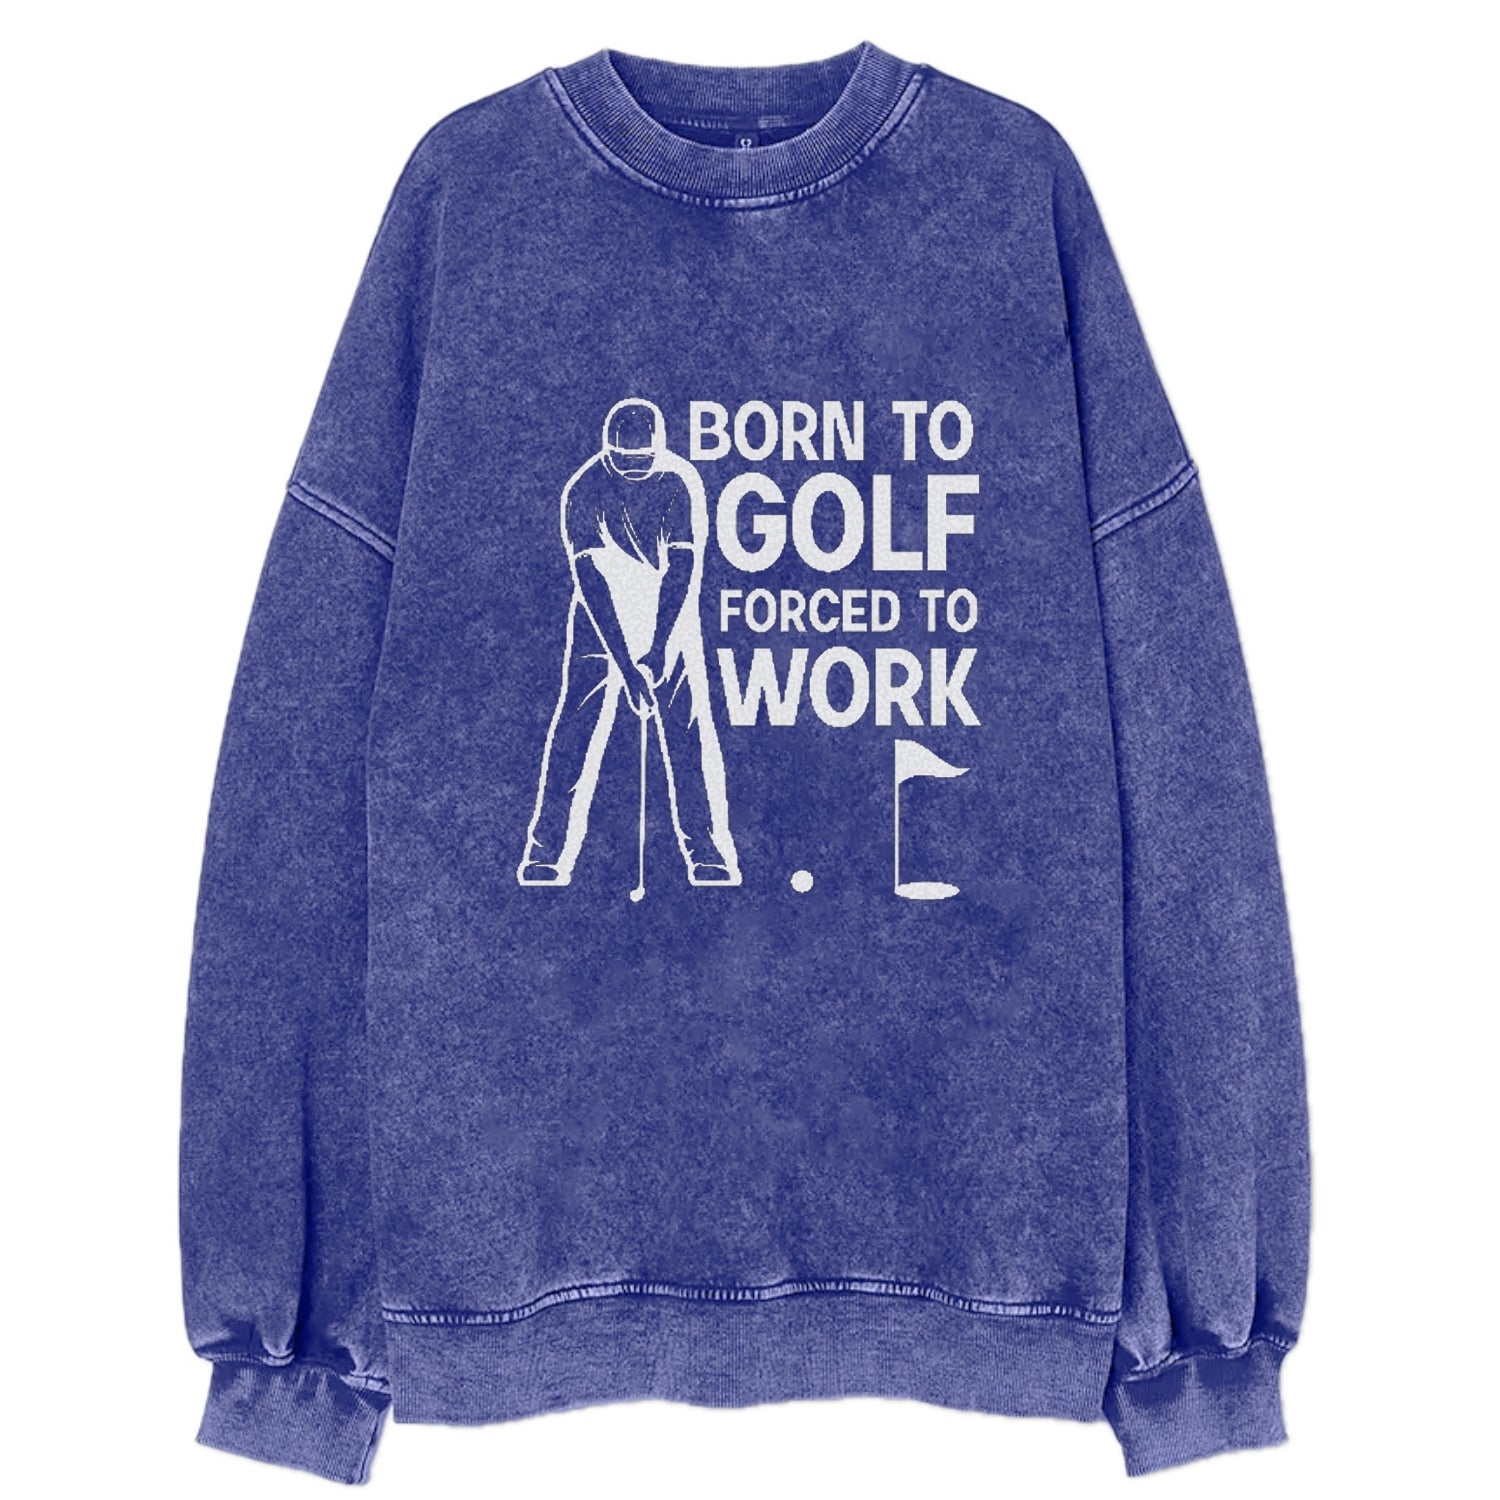 Born To Golf Forced To Work Vintage Sweatshirt